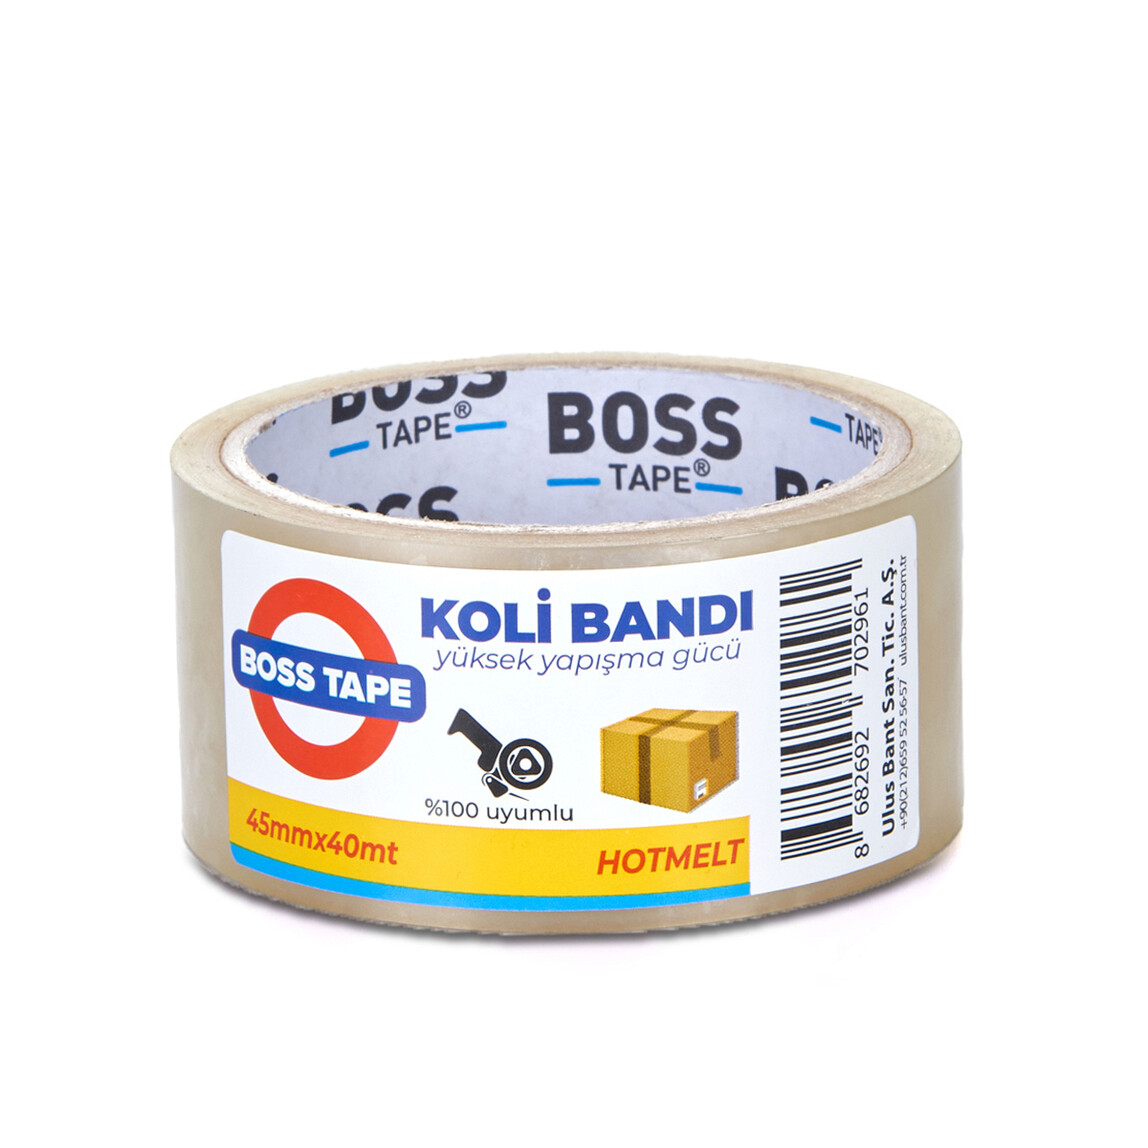    Boss Tape Hotmelt Koli Bandı  